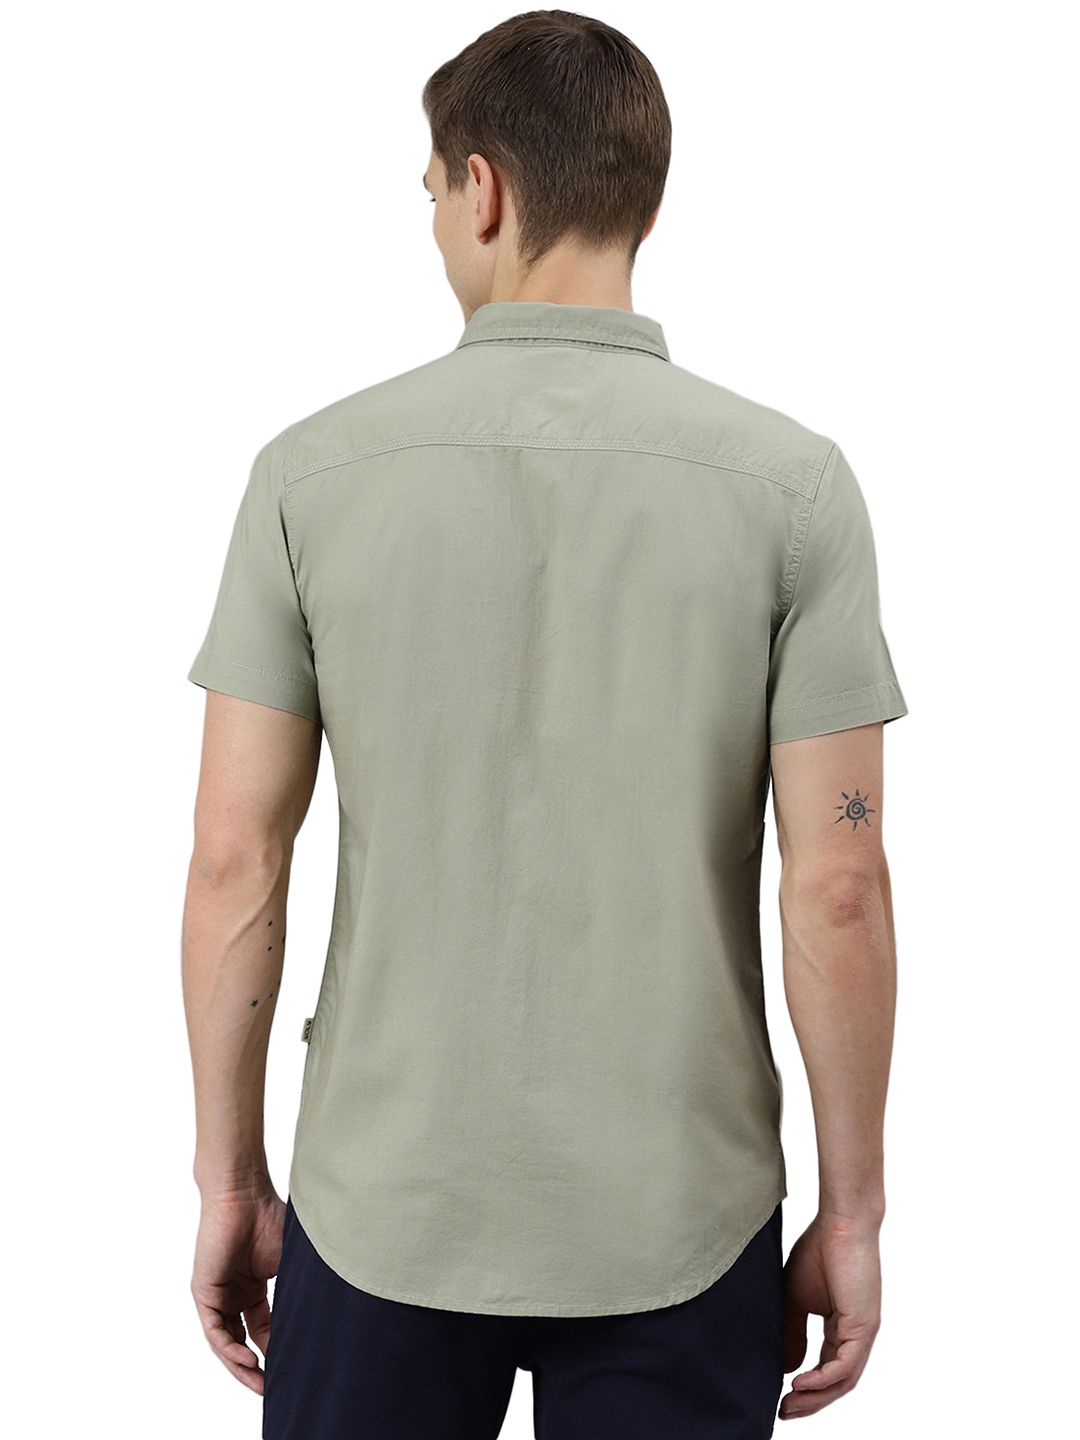 Lgreen half sleeves shirt for men